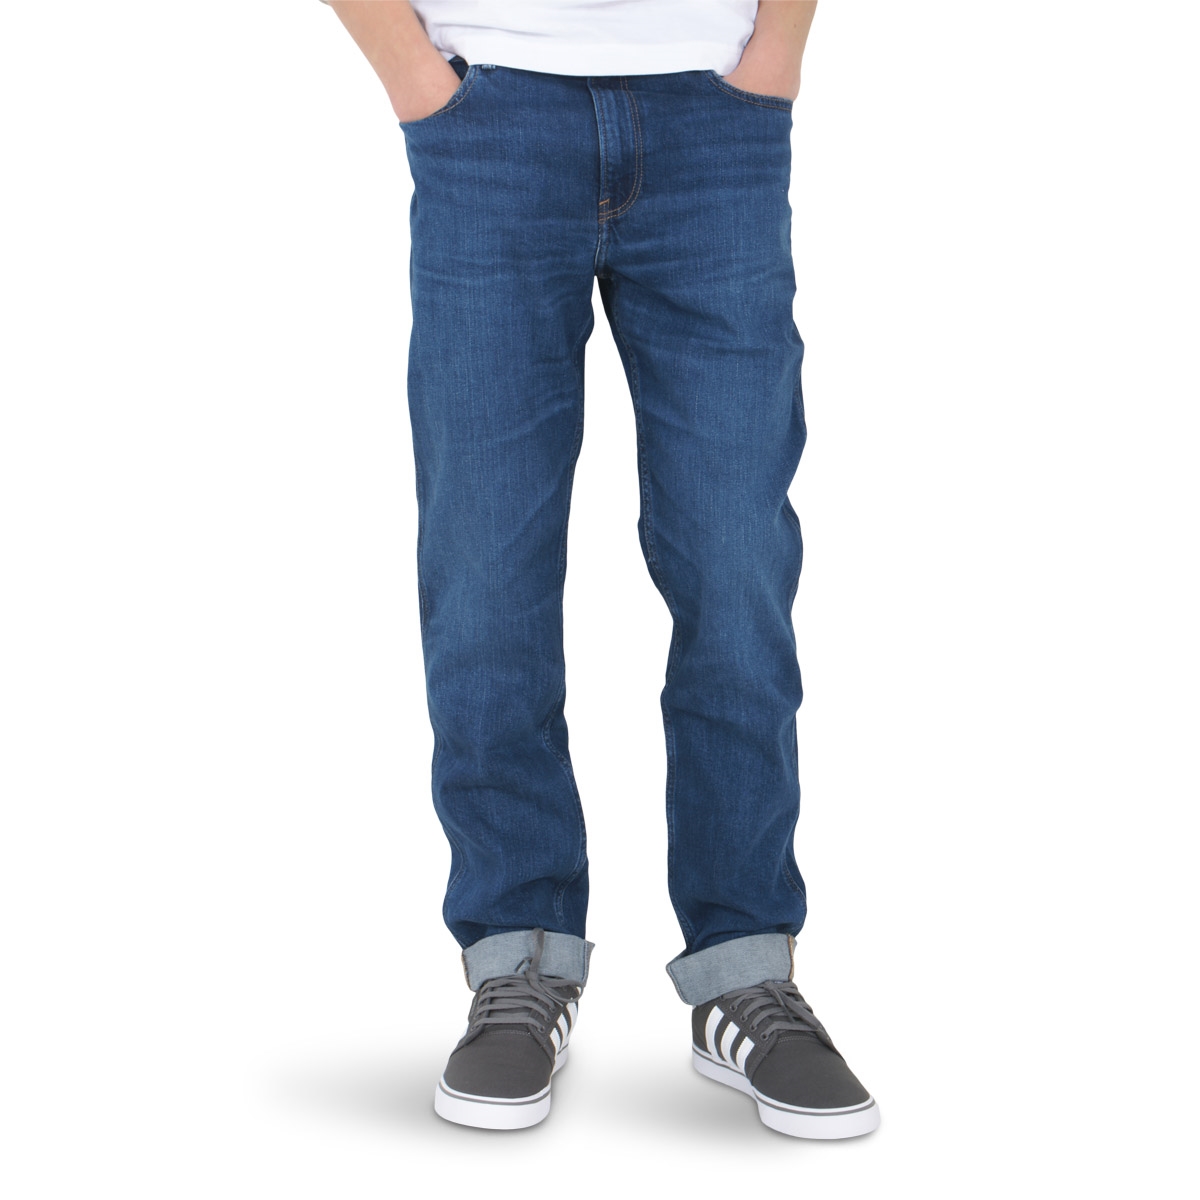 Hilfiger Boys Jeans Modern Straight